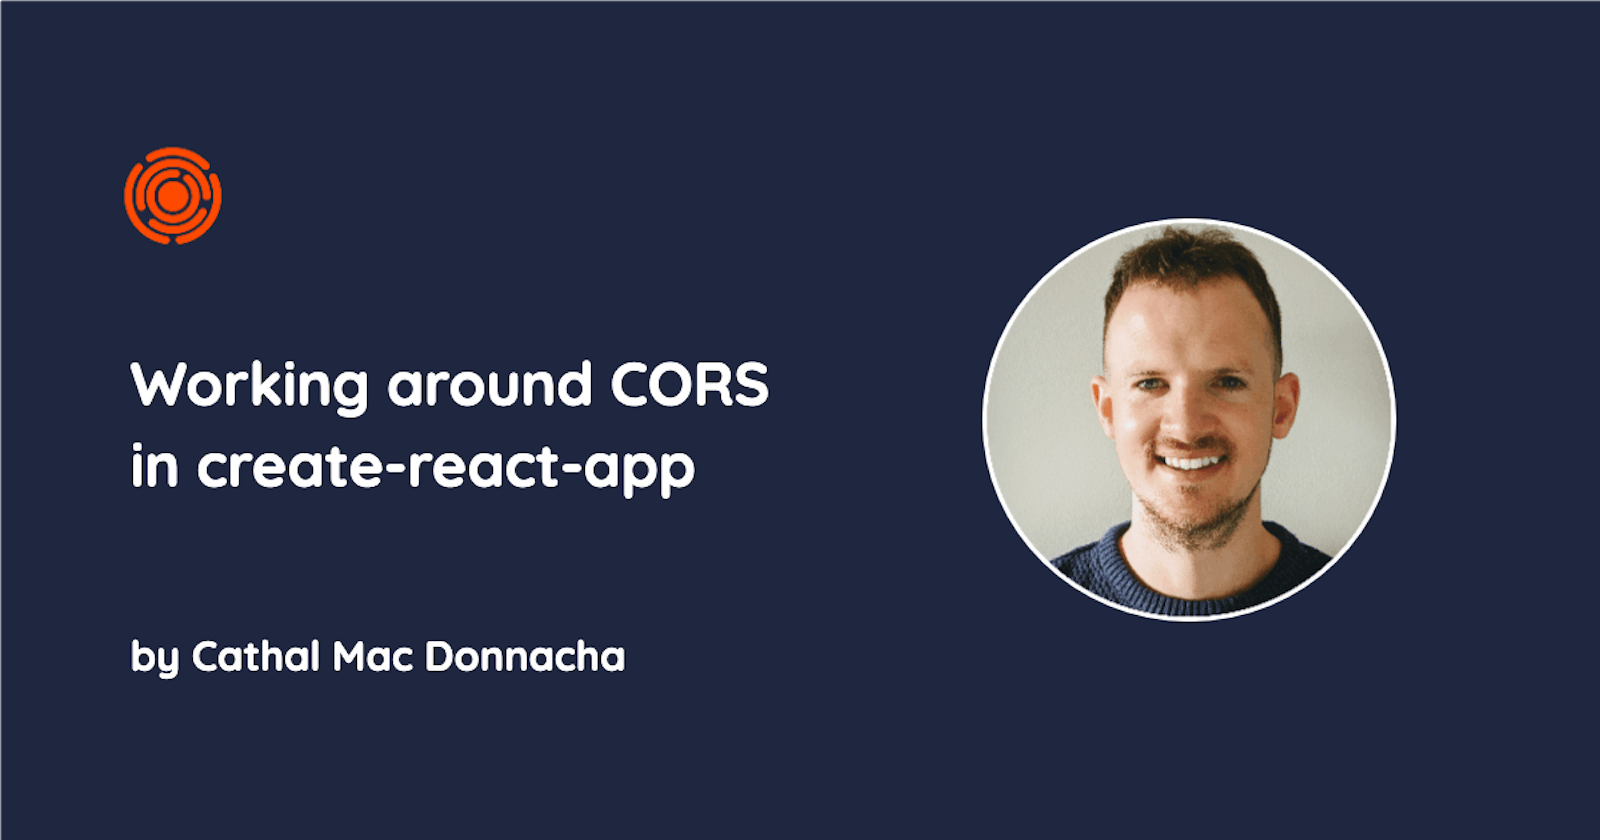 Working around CORS in create-react-app